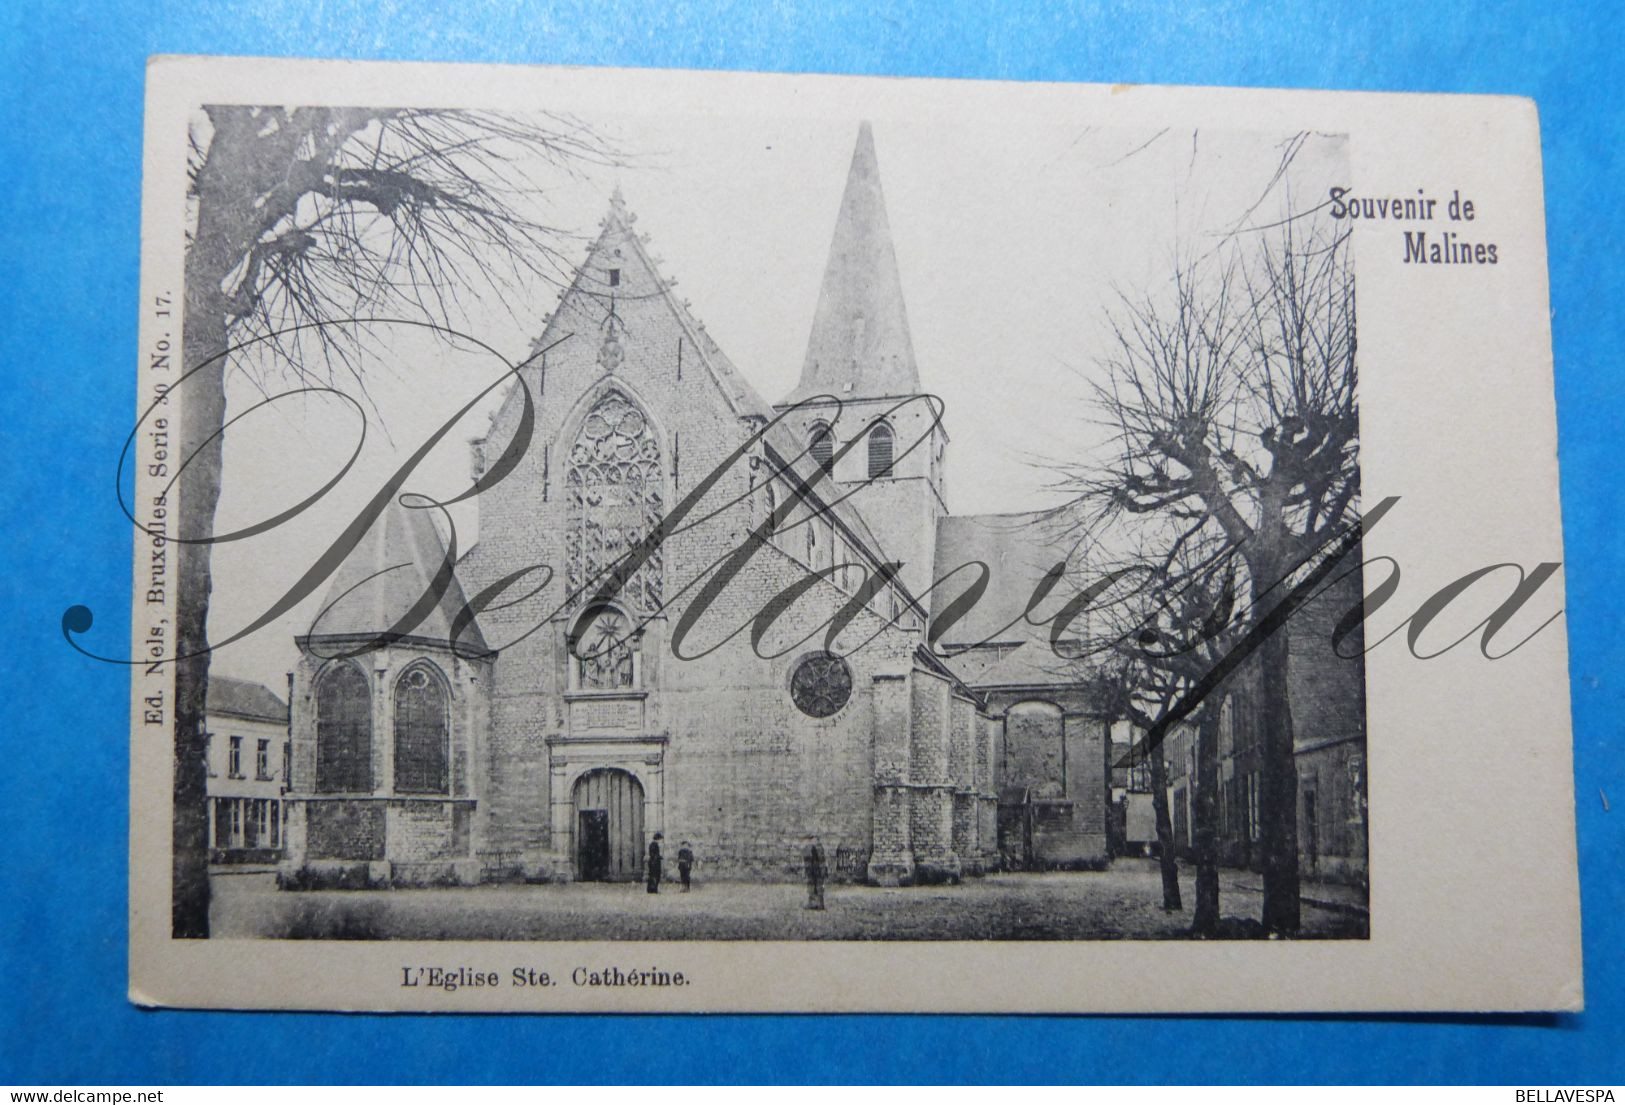 Mechelen Kerk St. Katherina Nels Serie 30, N°17 - Watermael-Boitsfort - Watermaal-Bosvoorde